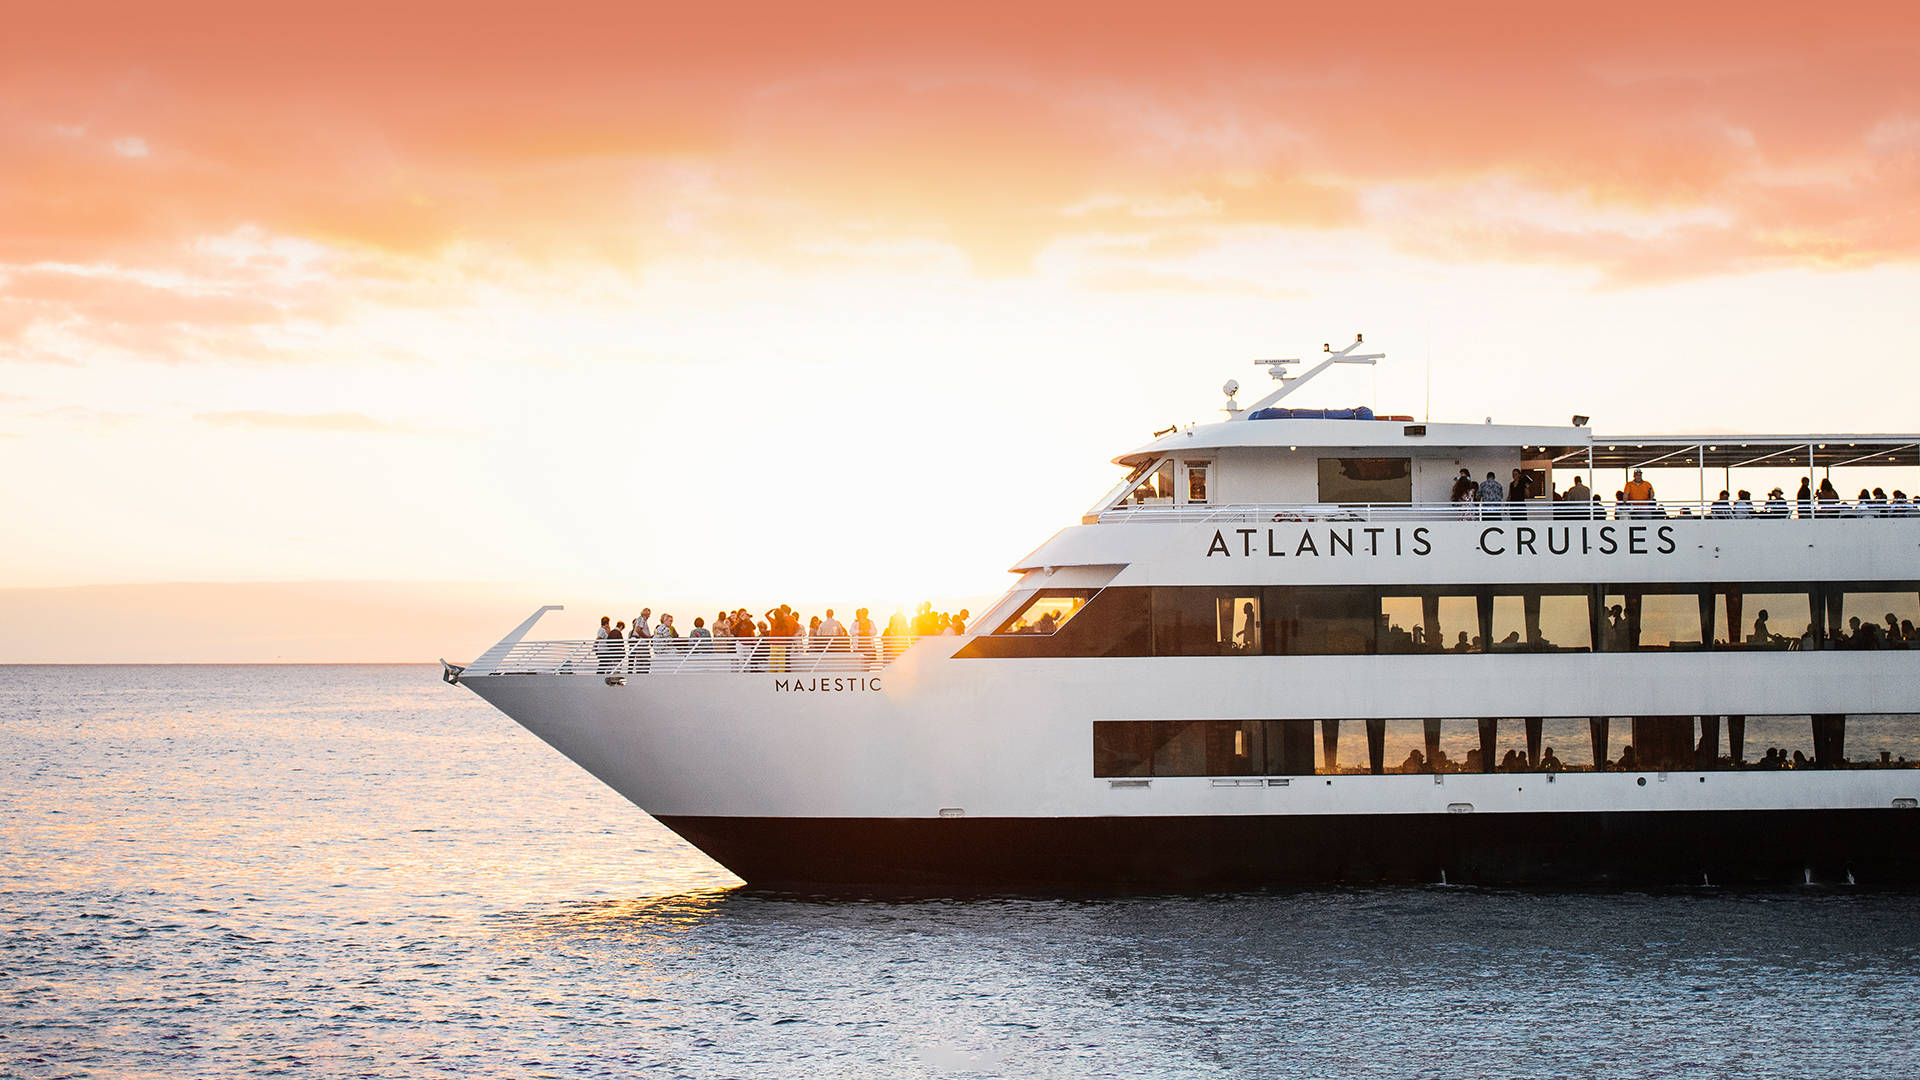 waikiki sunset cocktail cruise aboard the majestic by atlantis cruises